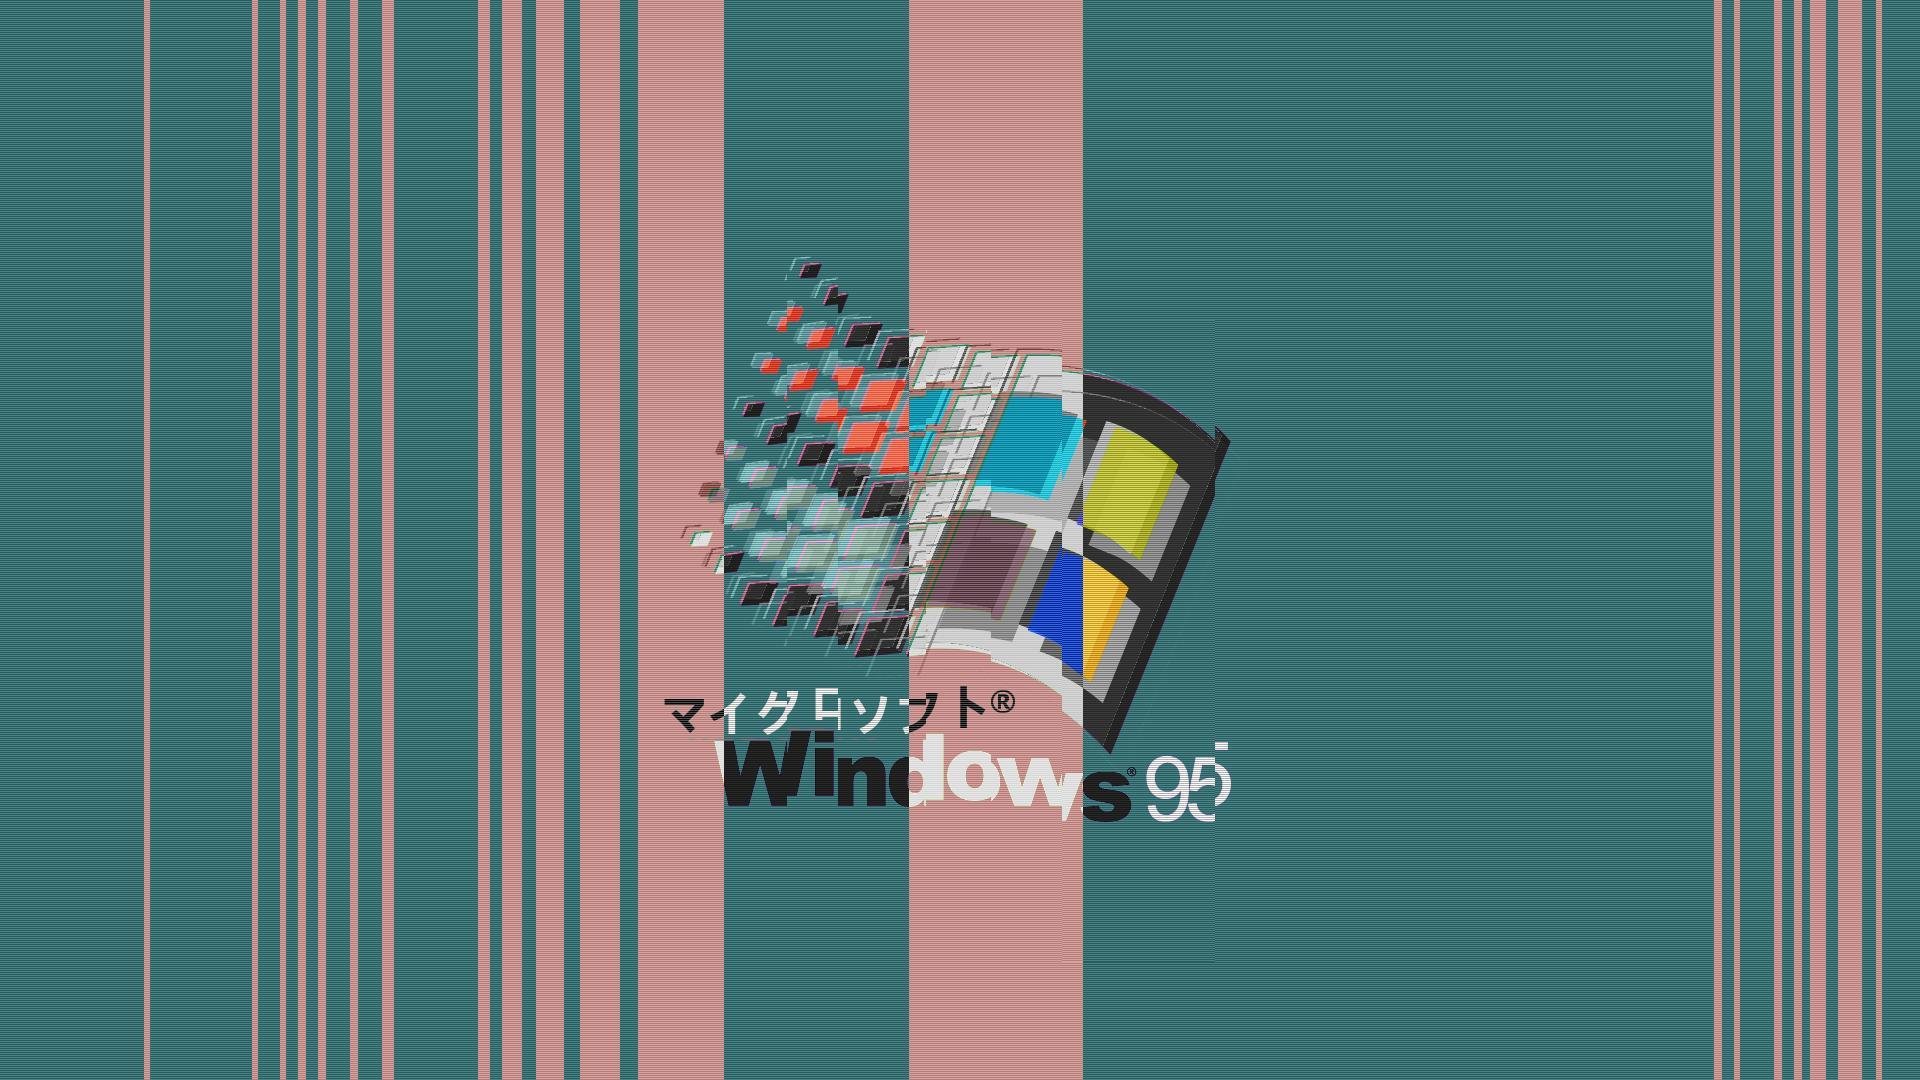 windows 95 wallpaper collection